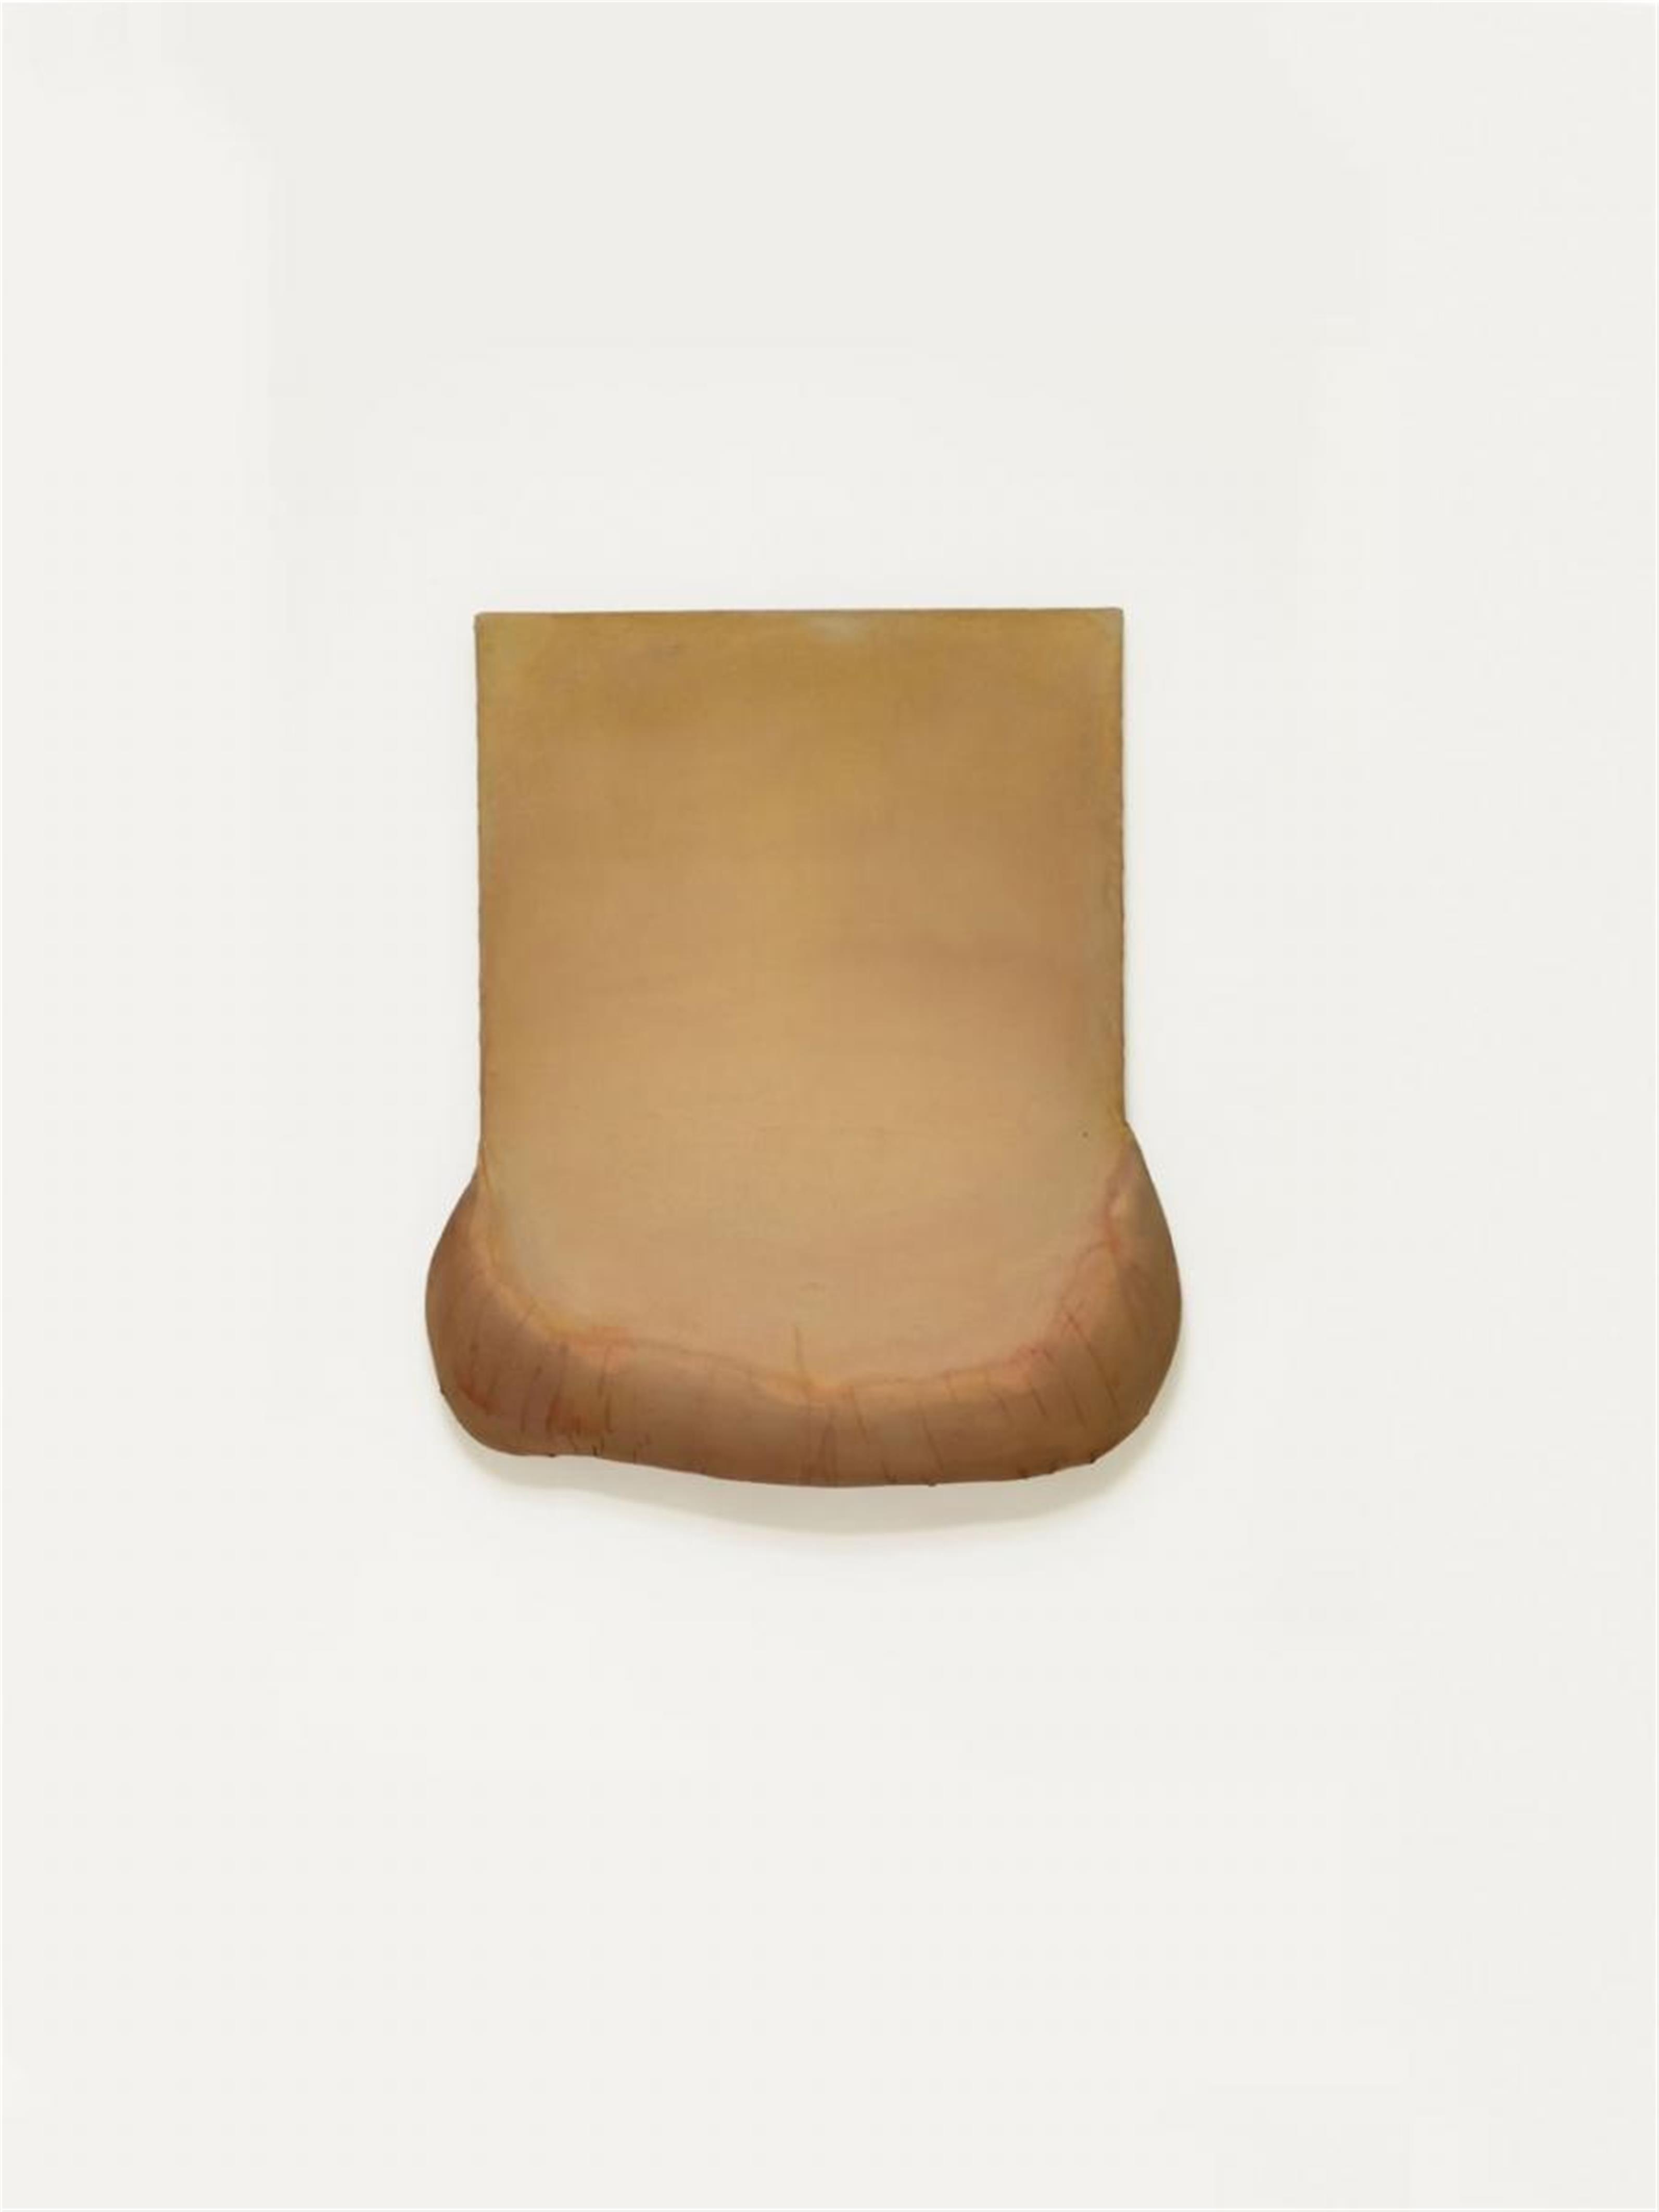 Gotthard Graubner - Untitled (Bagged cushion) - image-2